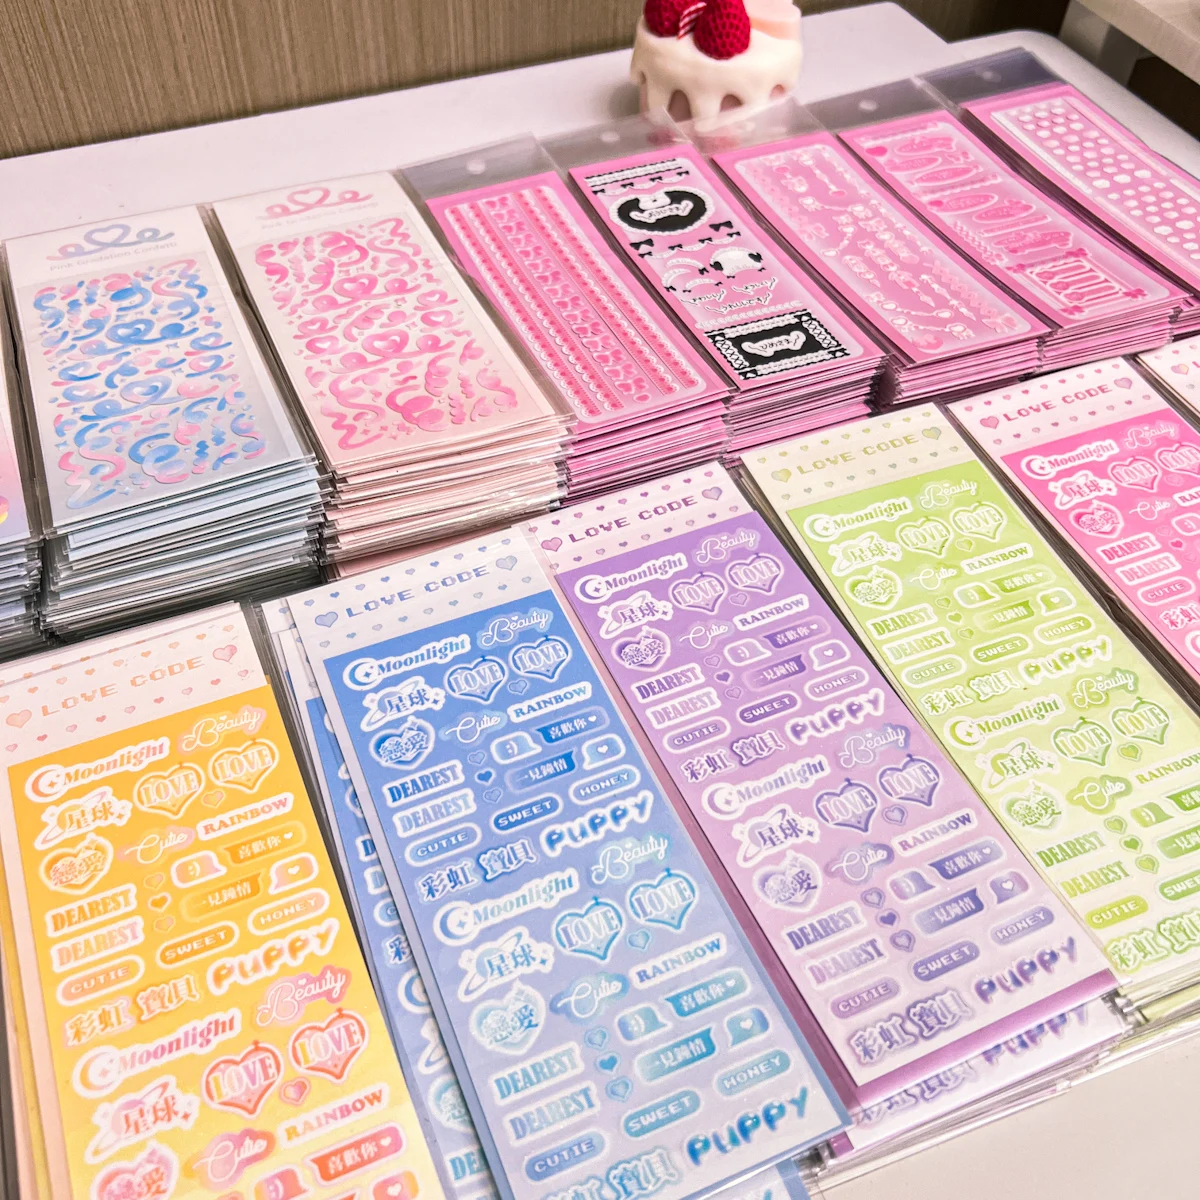 

SKYSONIC New BOBO Full Set Junk Journal Stickers Decor Scrapbooking Lable Idol Kpop Stationery Postcards Kawaii Sticker Suppli